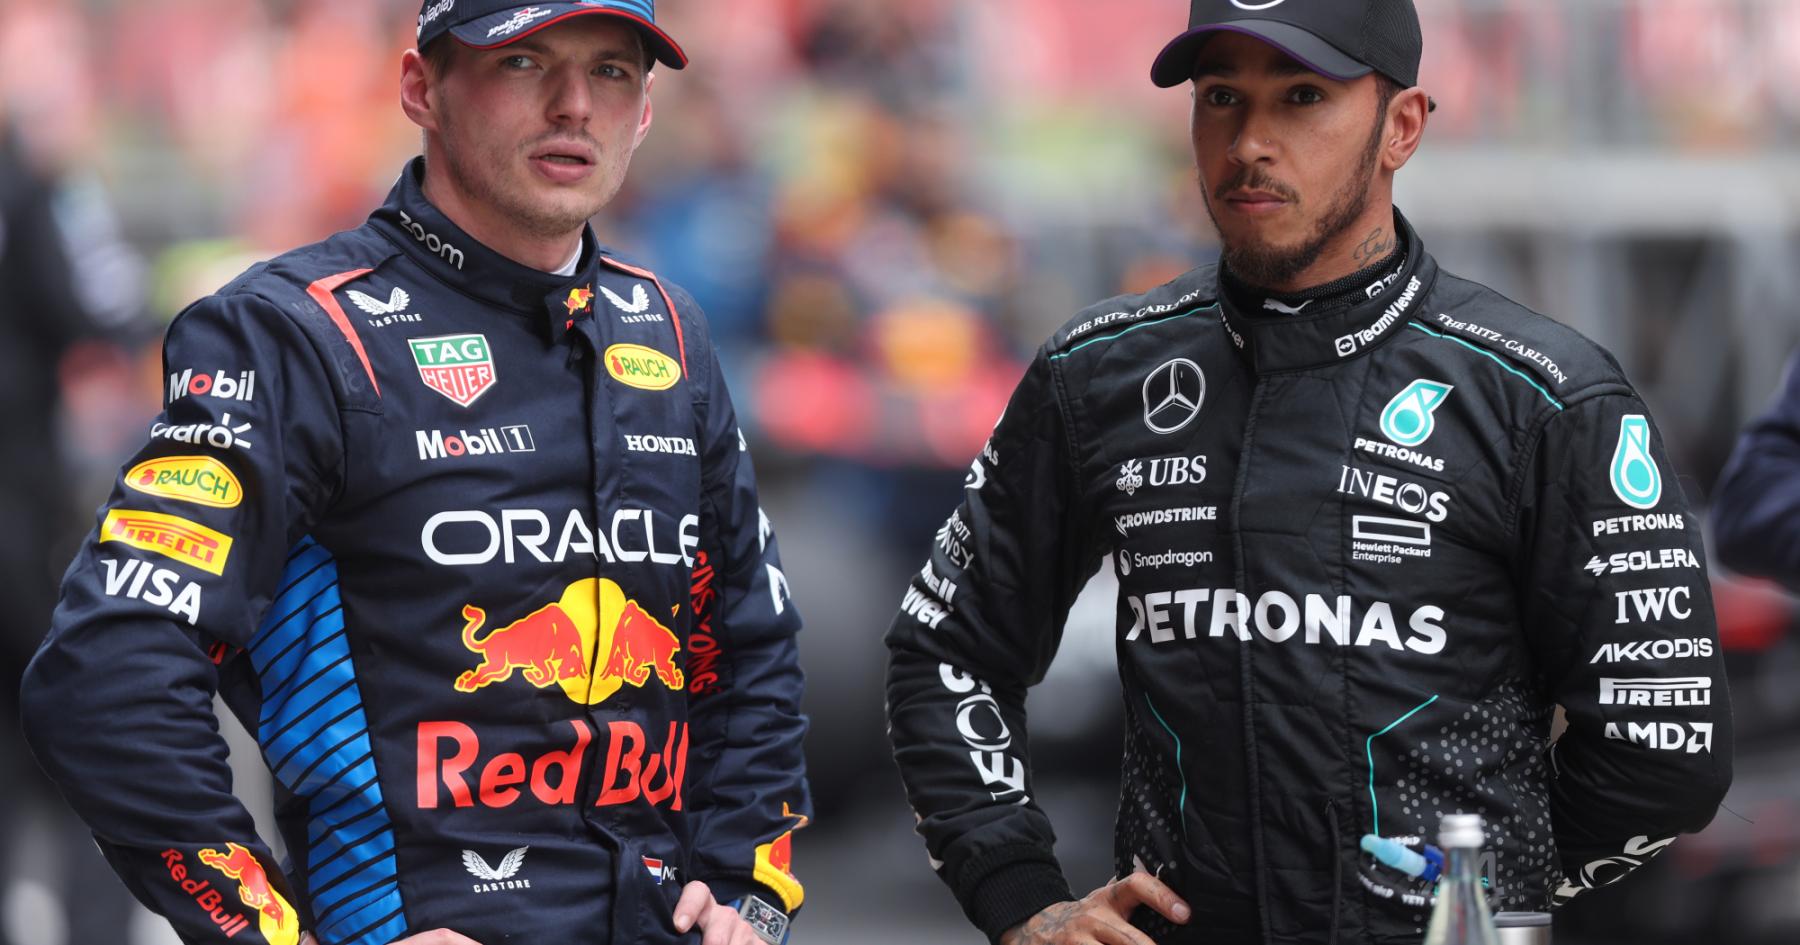 Verstappen: Breaking Barriers set by Hamilton in the World of Motorsport